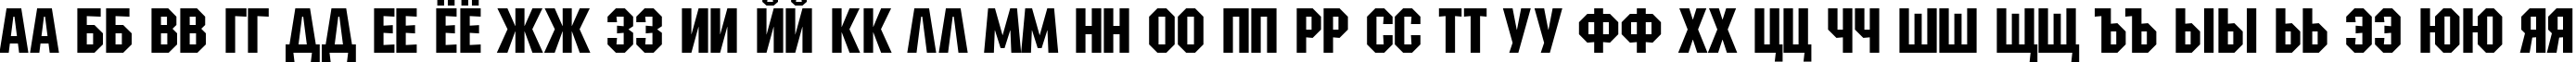 Пример написания русского алфавита шрифтом a_MachinaNova